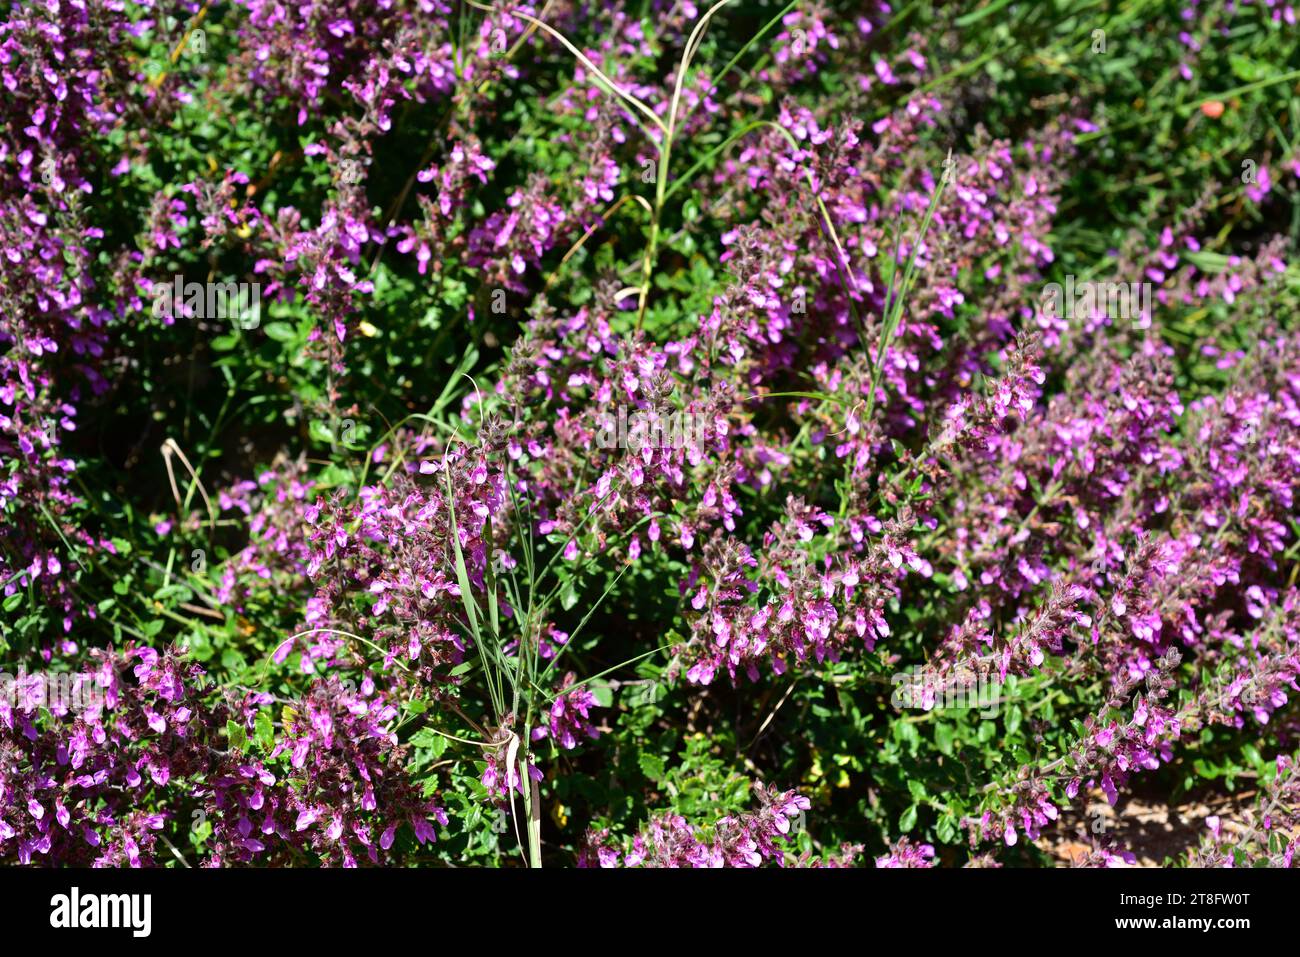 Wall germander (Teucrium chamaedrys) is a medicinal perennial herb native to Mediterranean basin. Stock Photo